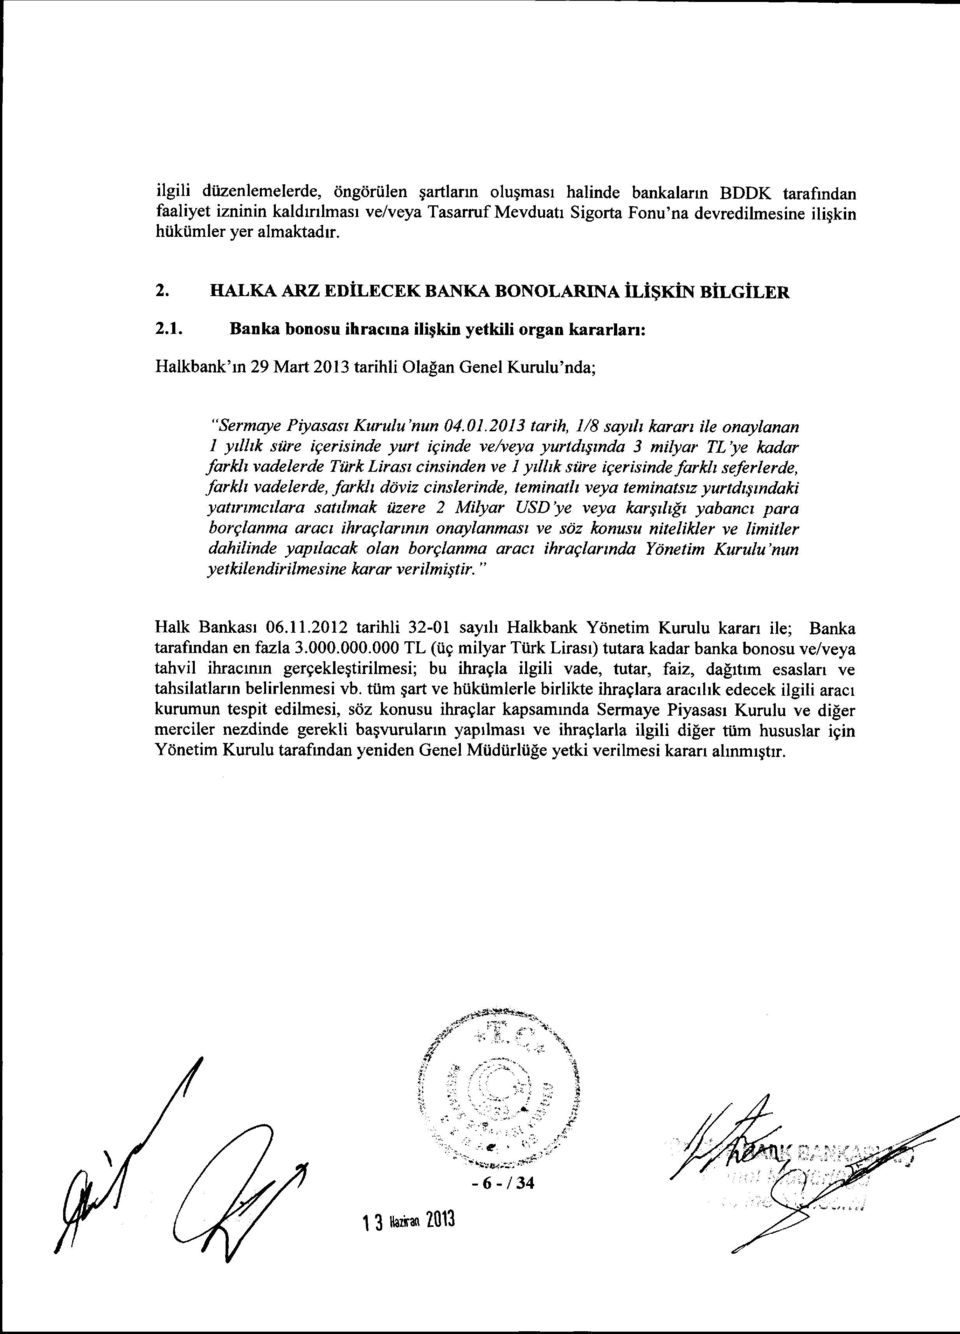 Banka bonosu ihraclna ilipkin yetkili organ kararlarr: Halkbank'rn29 Mart 2013